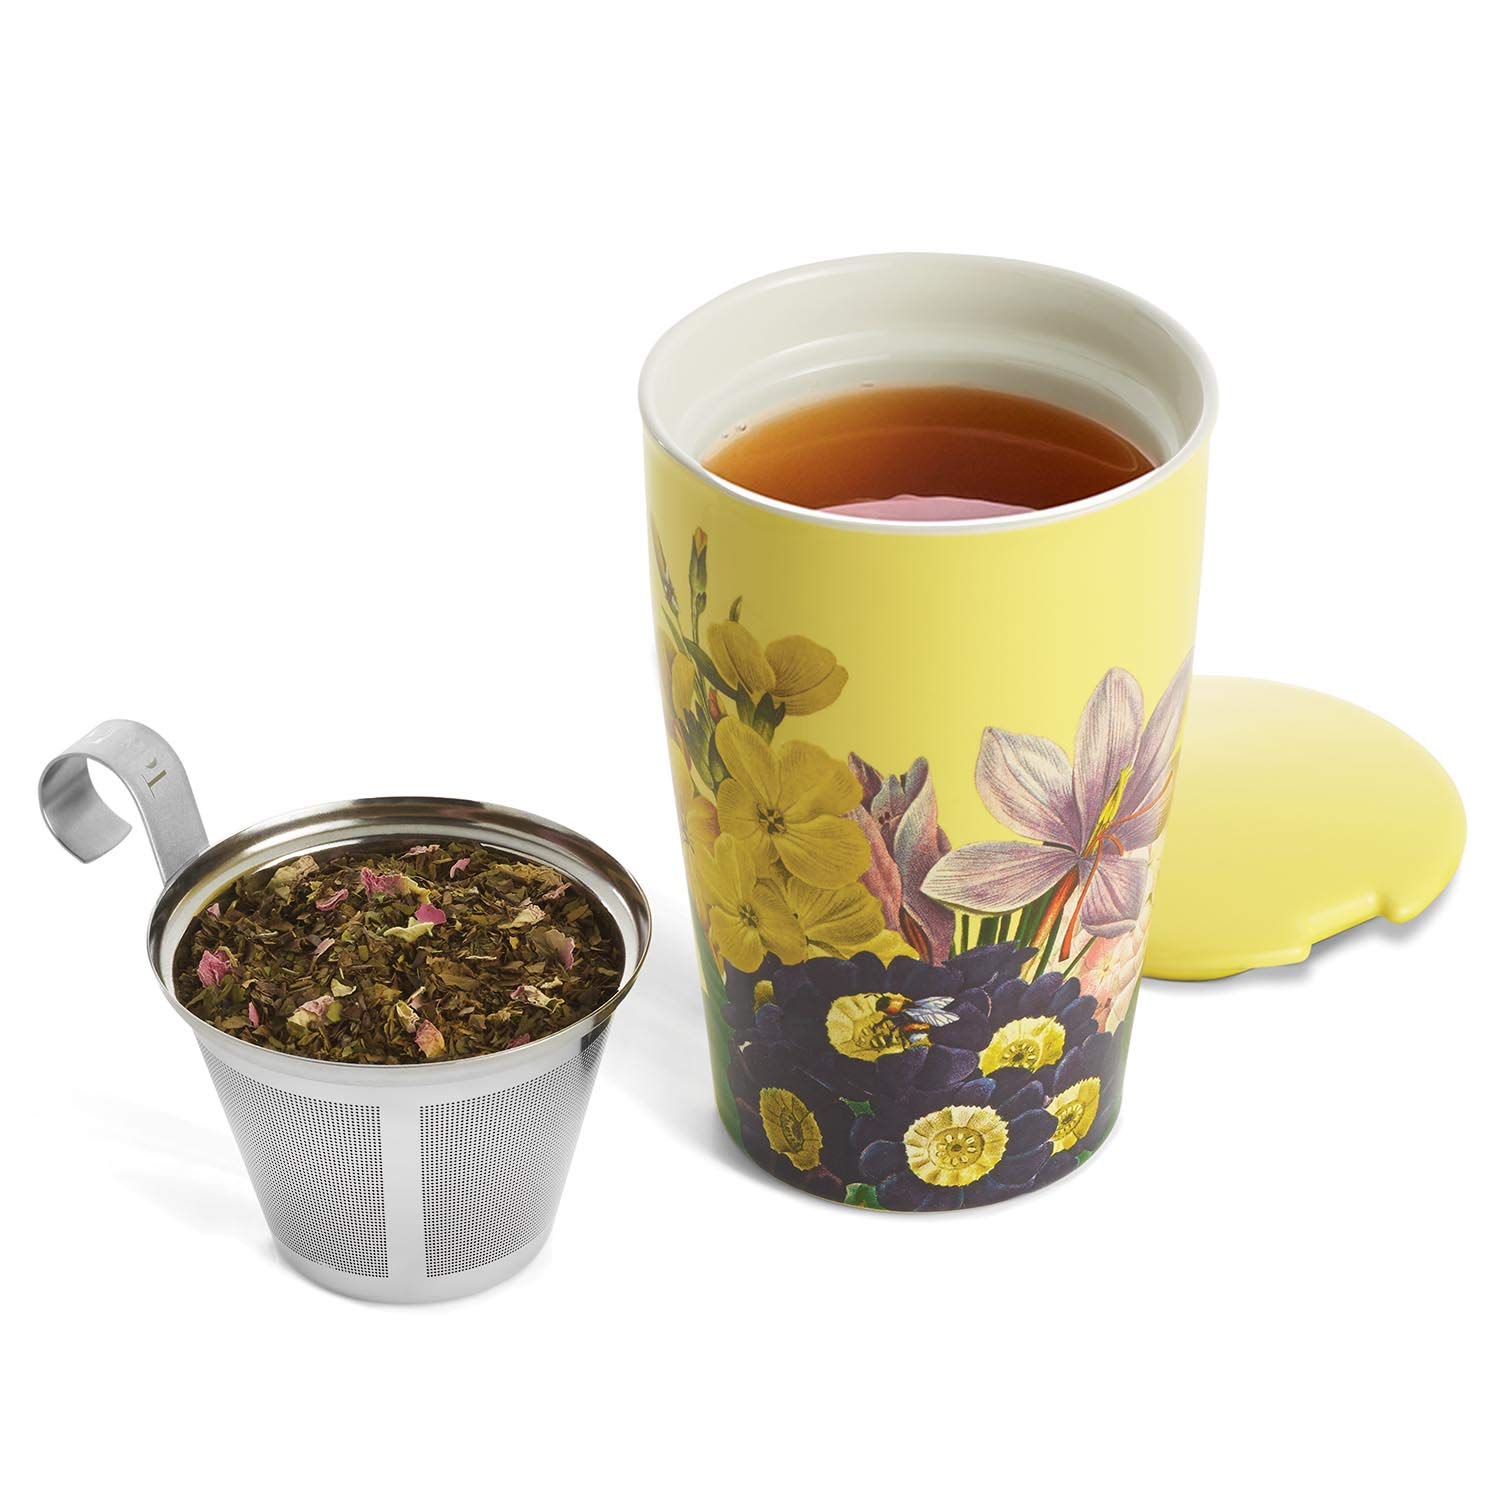 Tea Forte Kati Cup Soleil, Ceramic Tea Infuser Cup with Infuser Basket and Lid for Steeping Loose Leaf Tea